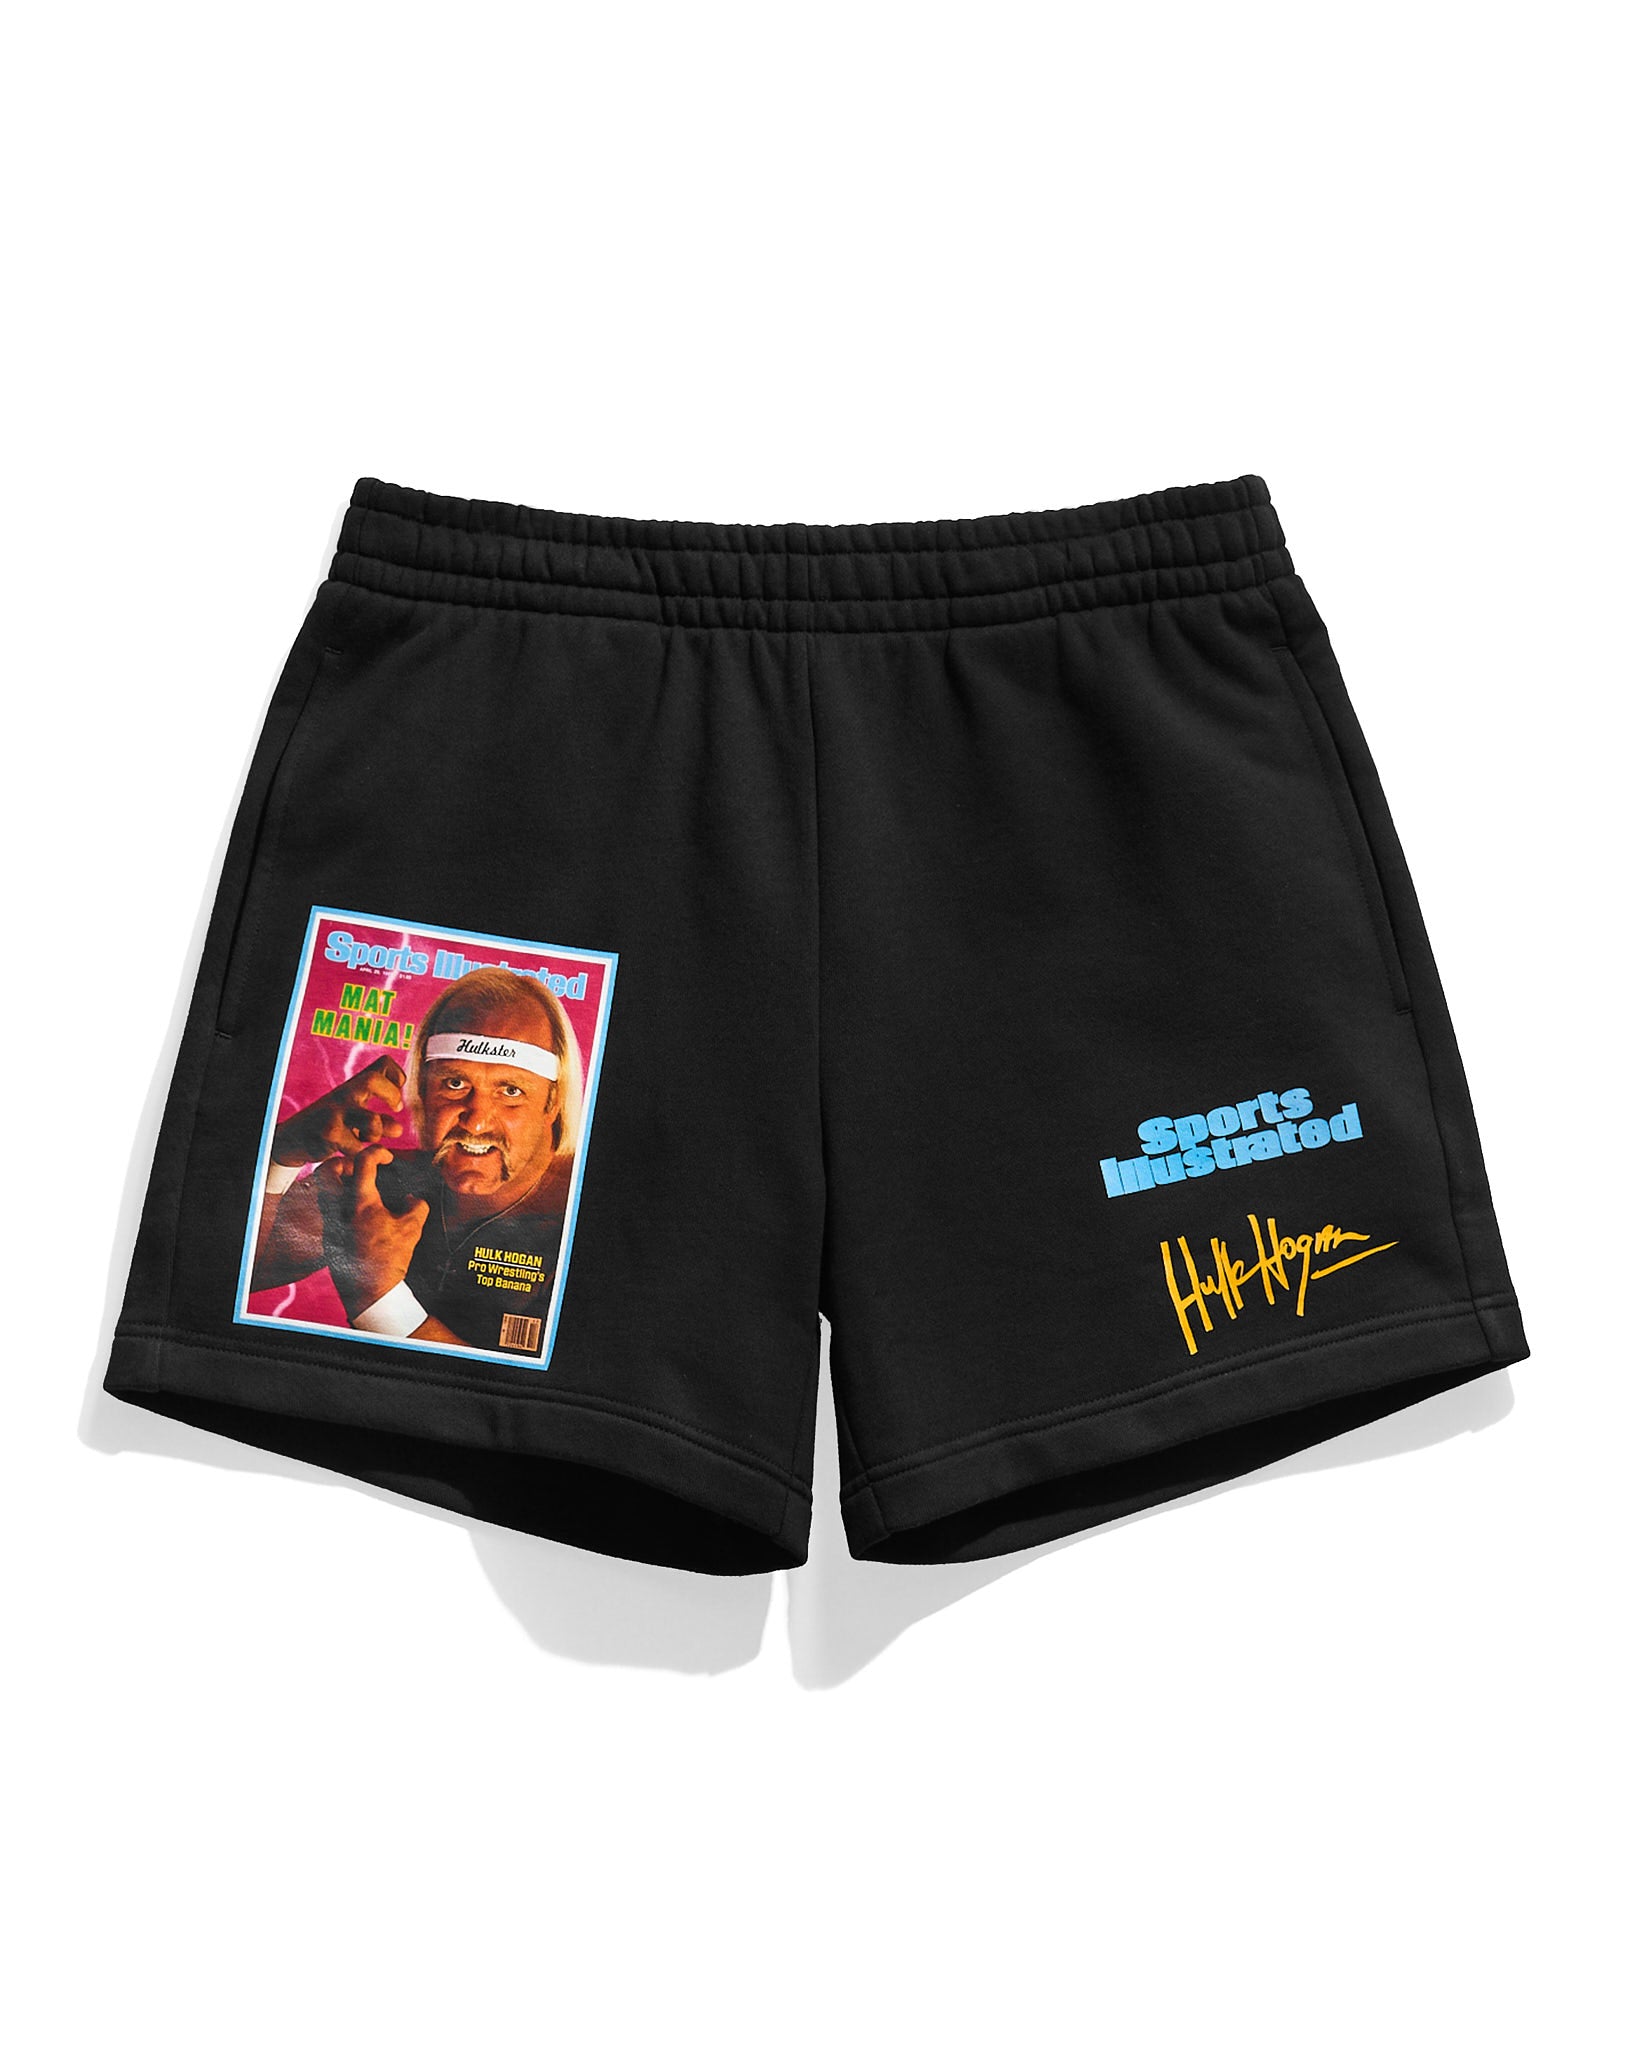 Hulk Hogan Sports Illustrated Cover Fleece Shorts